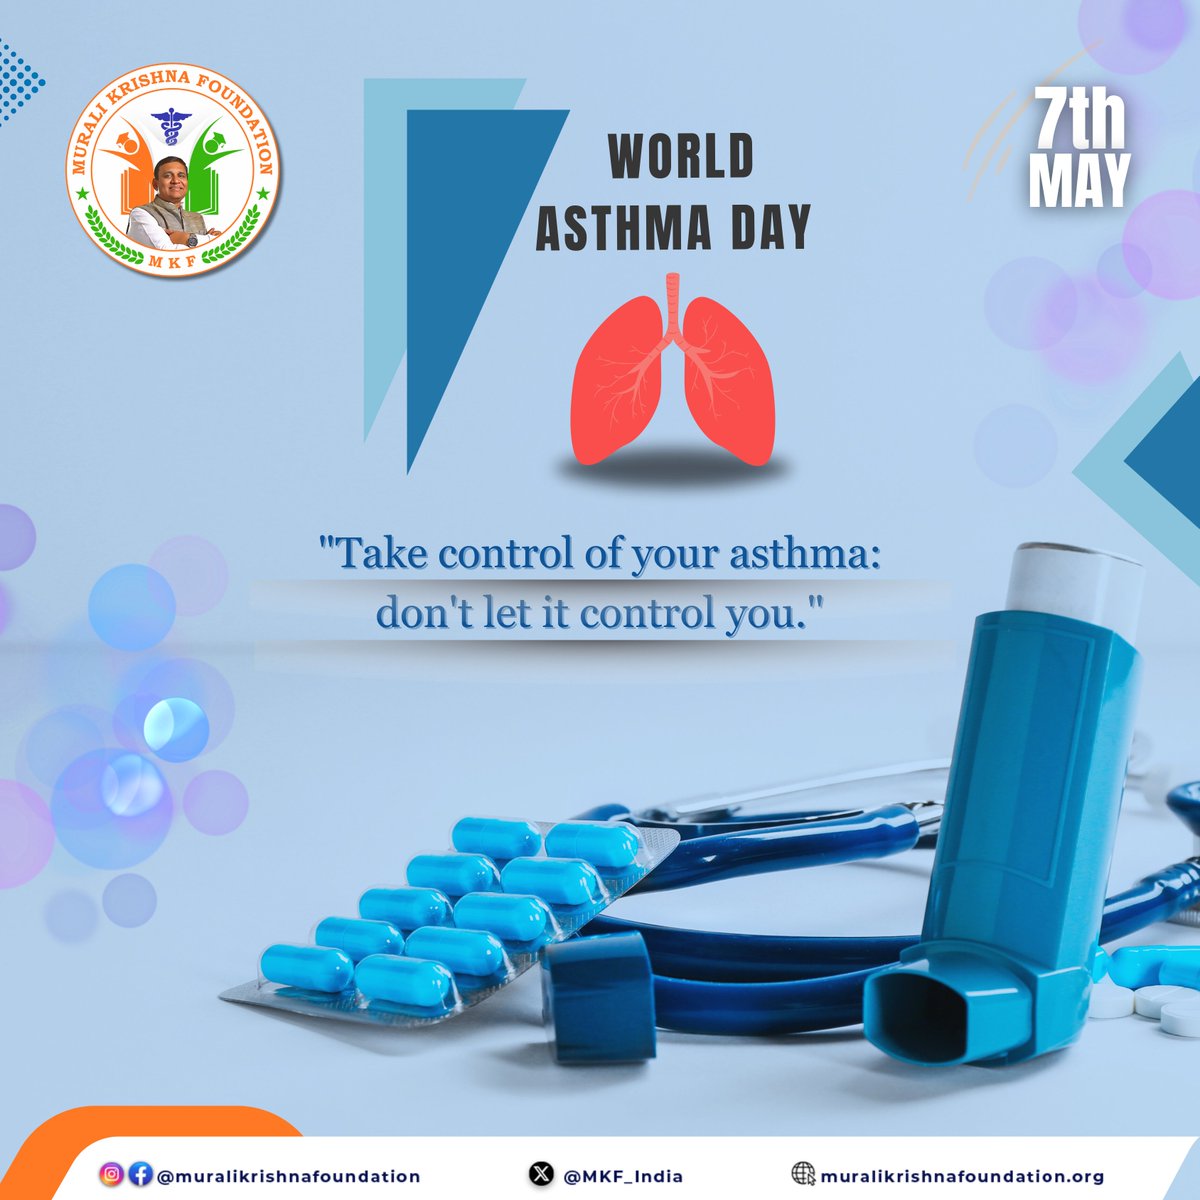 Today is World Asthma Day. Let's raise awareness and support for those living with asthma.

#muralikrishnafoundation #dmuralikrishna #mkf #MKFoundation #Bargarh #Odisha #WorldAsthmaDay #ashtma